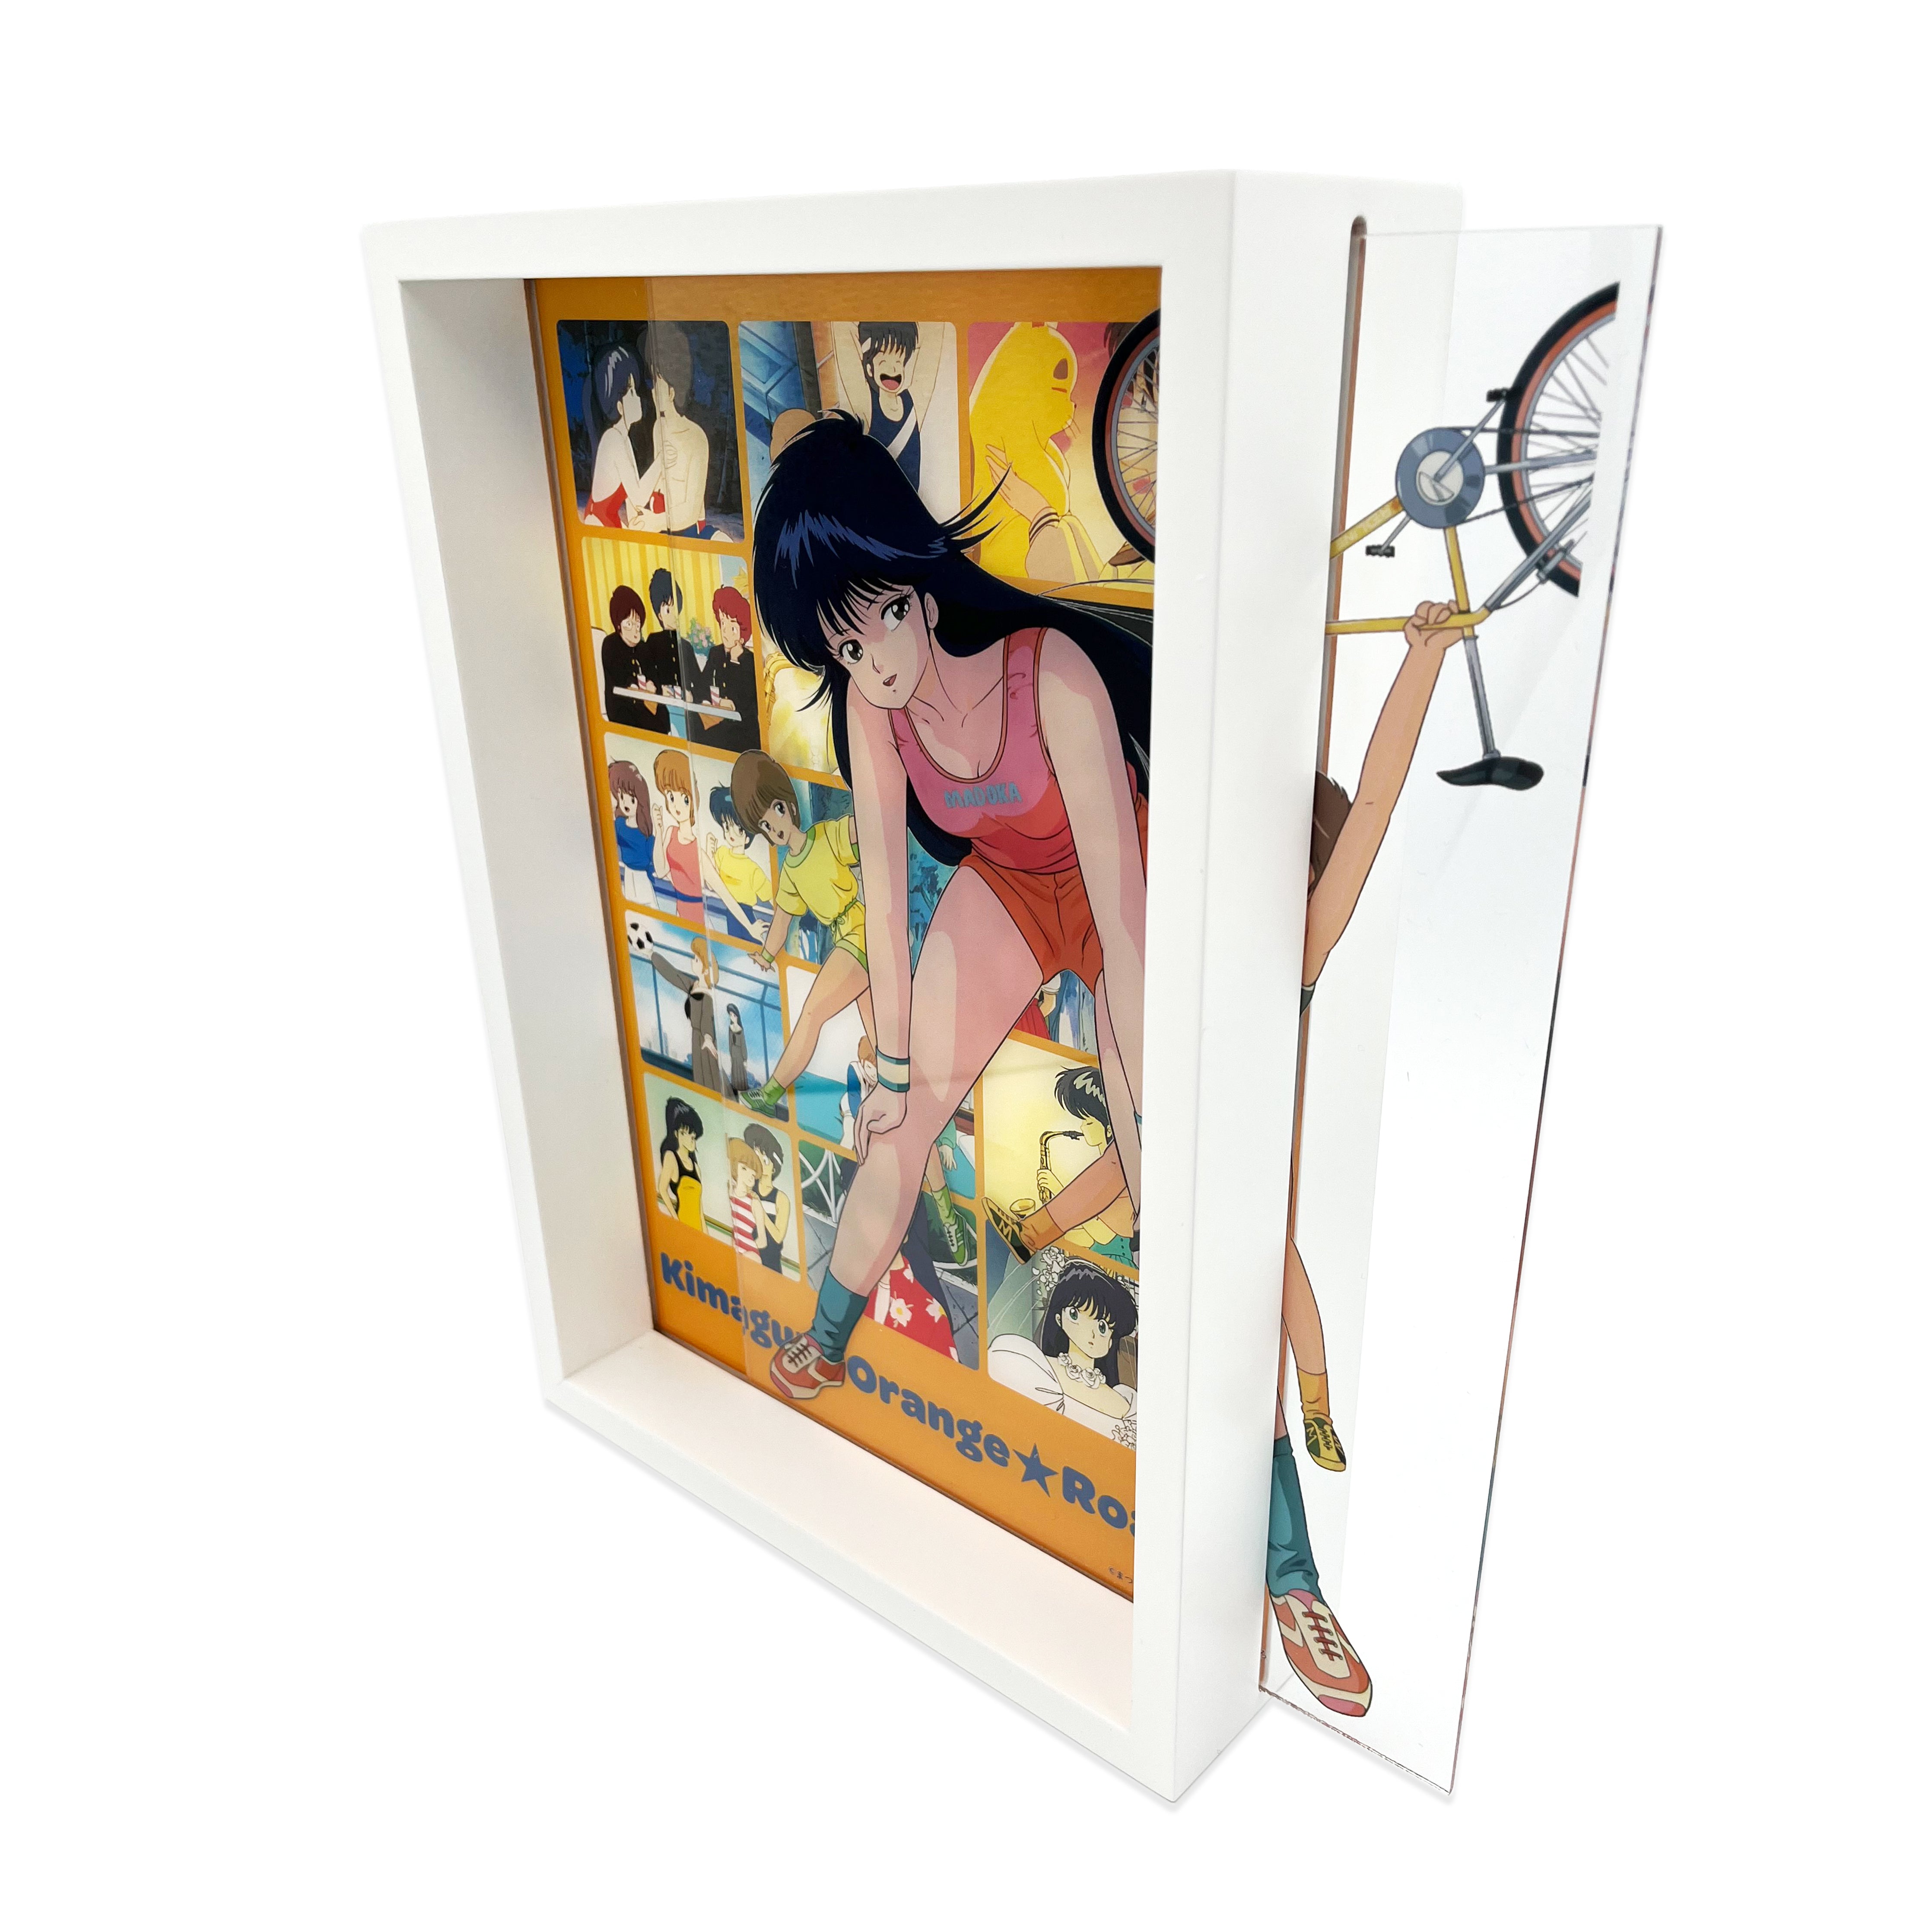 Kimagure Orange Road, 88Graph, Box Framed Acrylic Art (Anime/Orange)